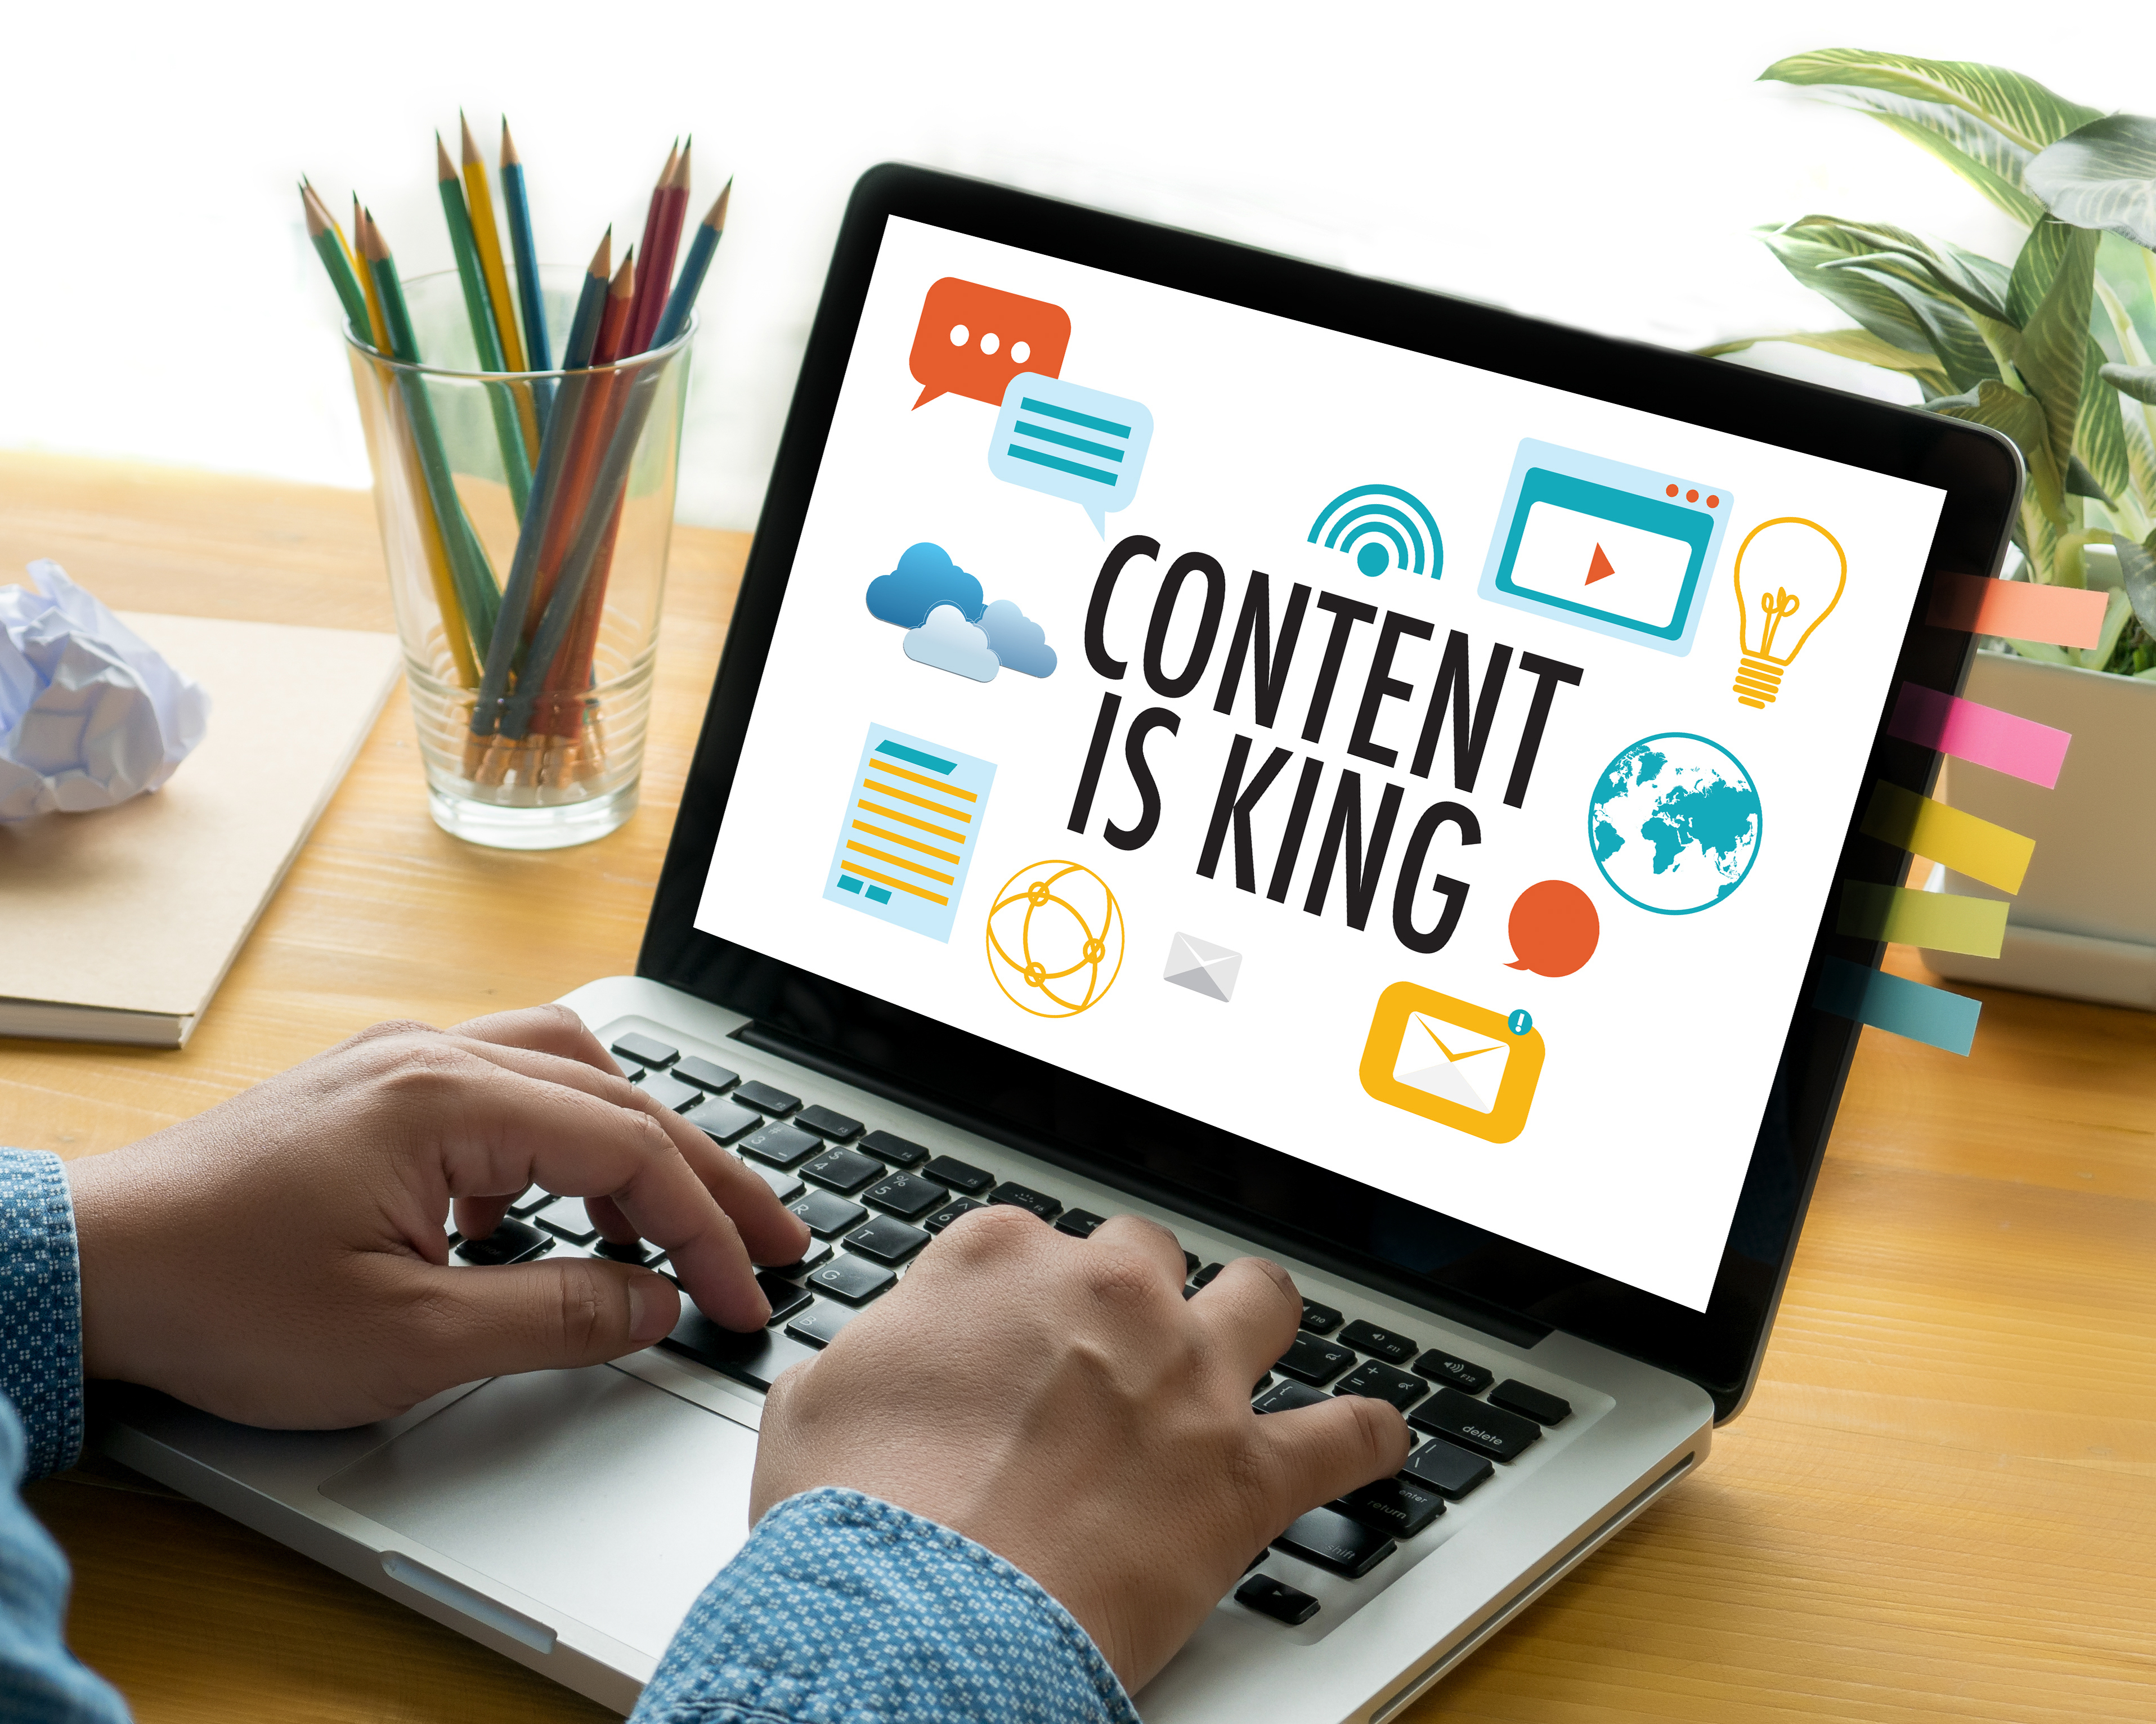 B2B inbound marketing agency laptop displaying "content is king" 